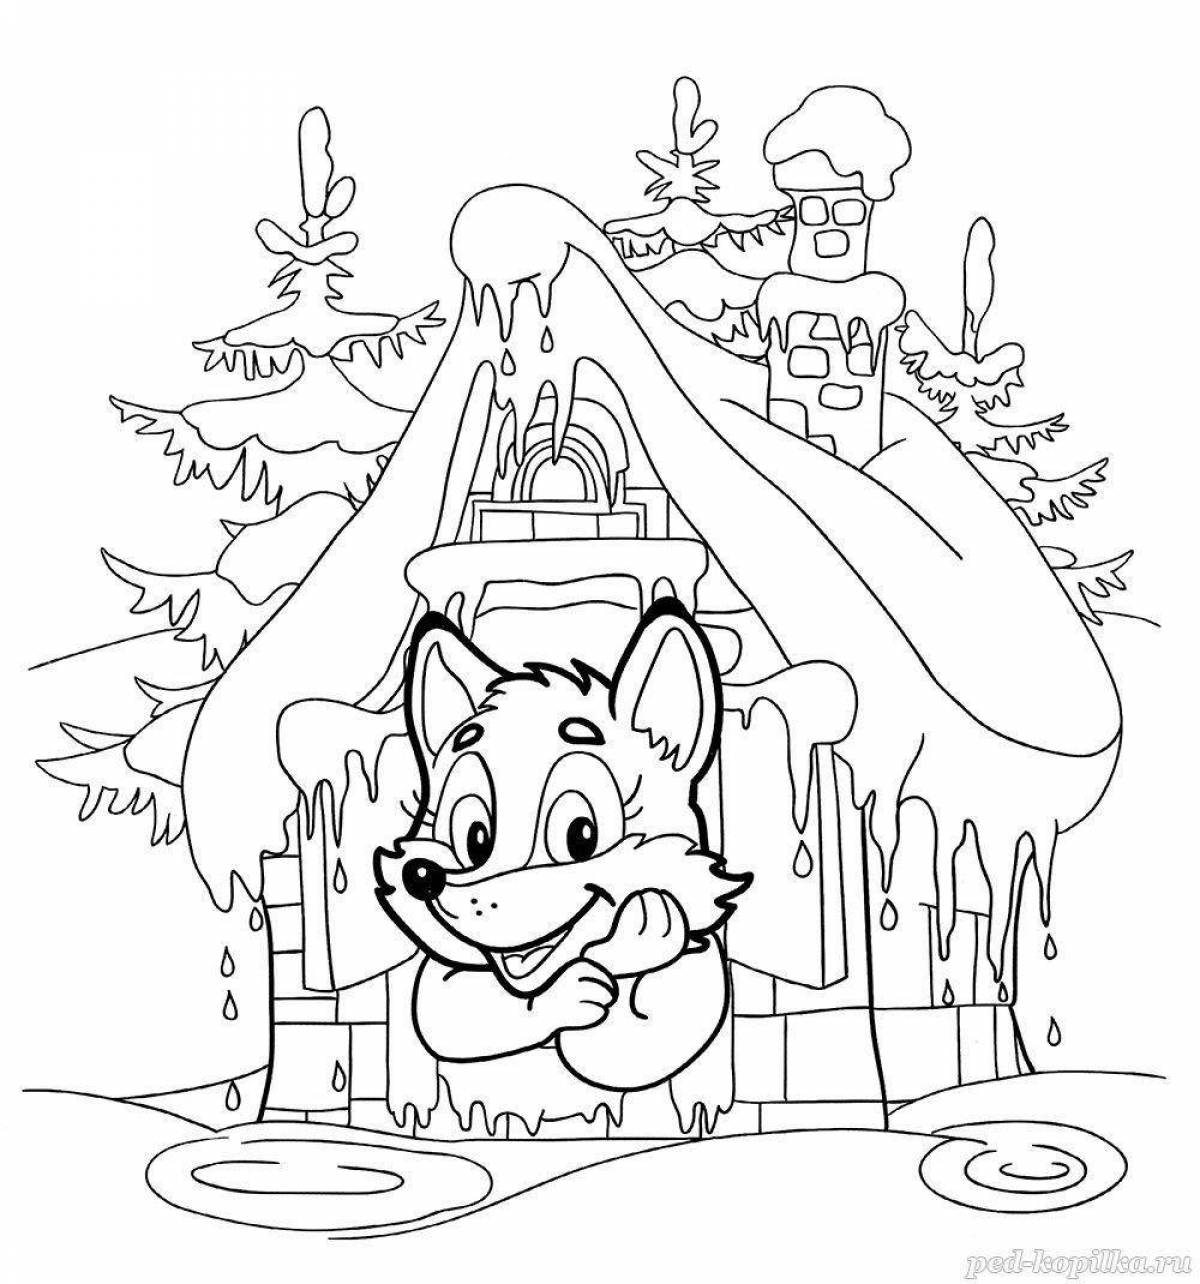 Shiny rabbit hut coloring page